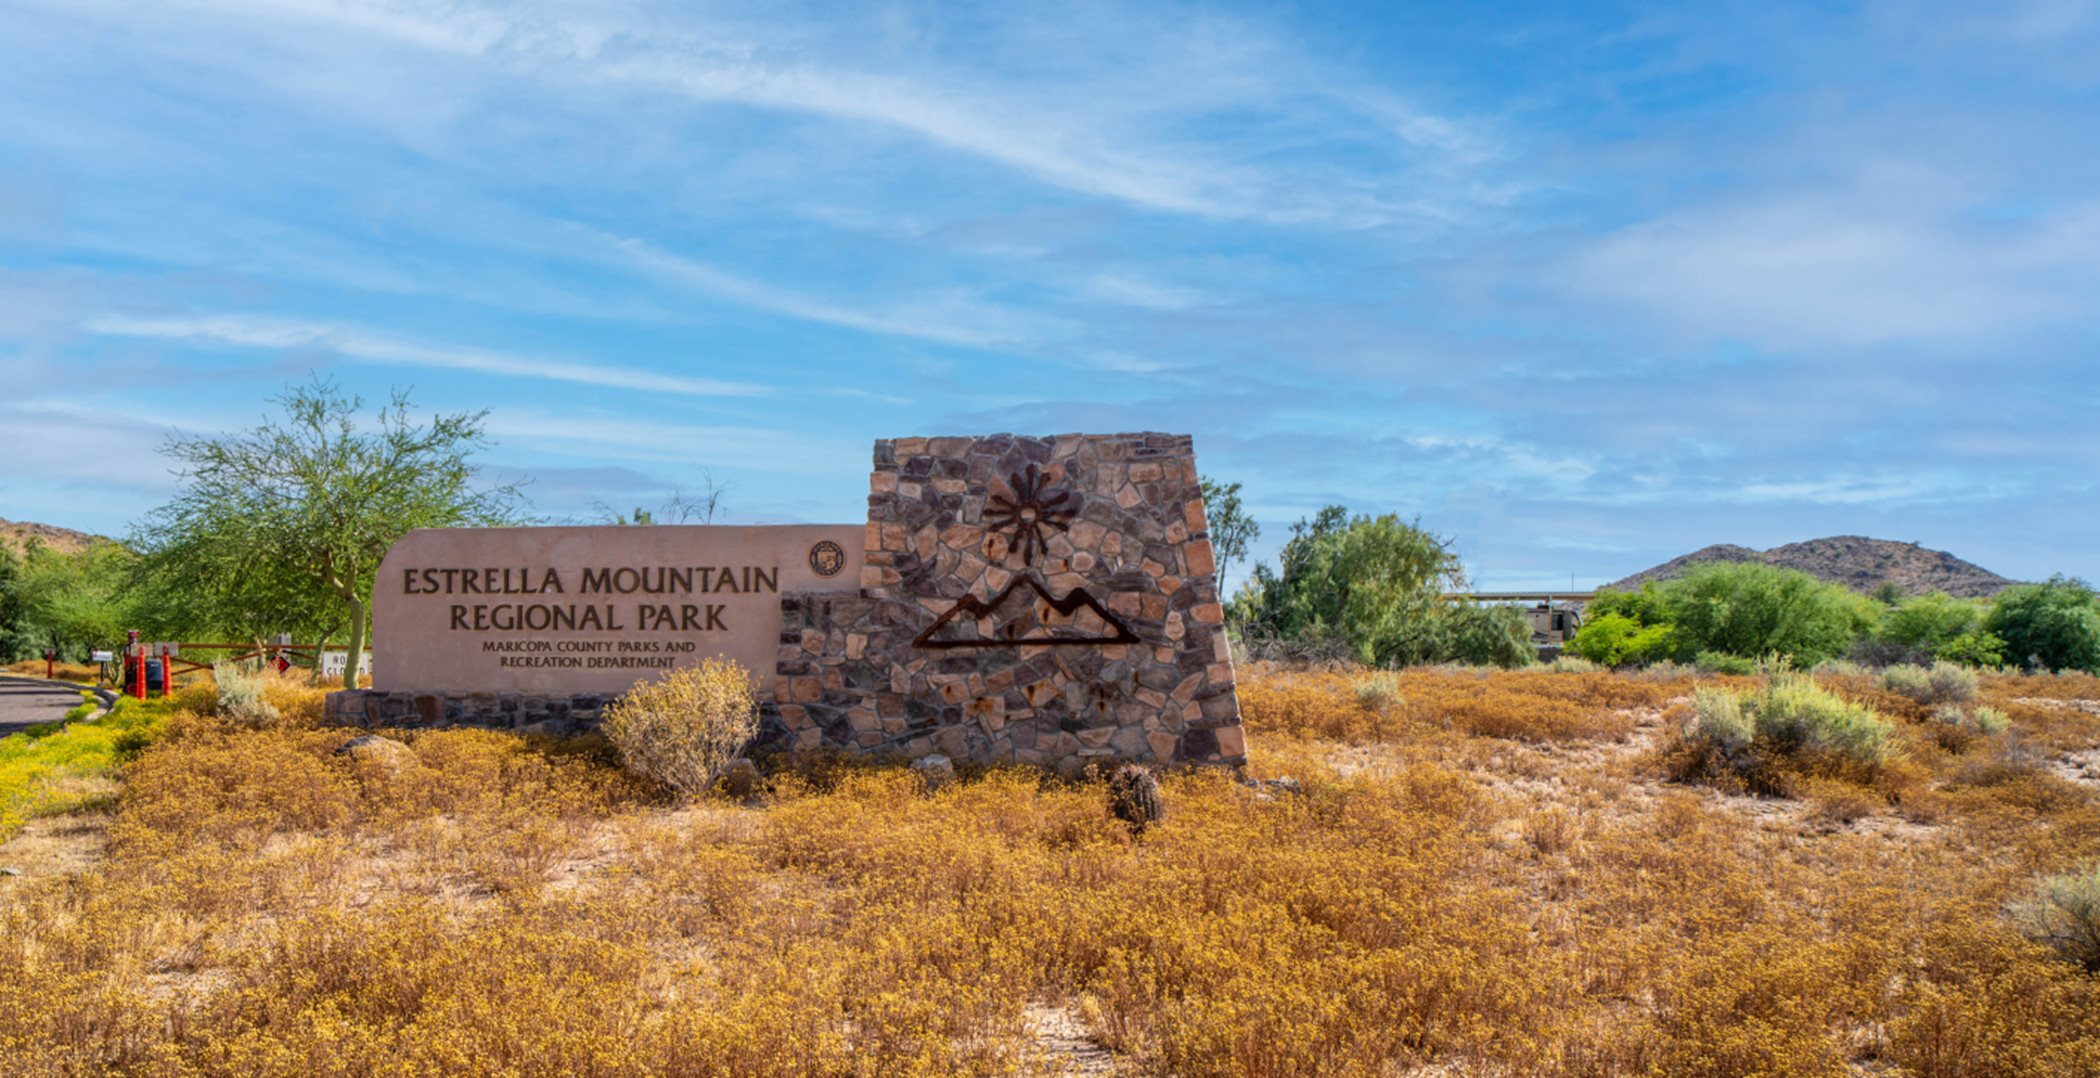 Estrella Mountain Regional Park entry monument